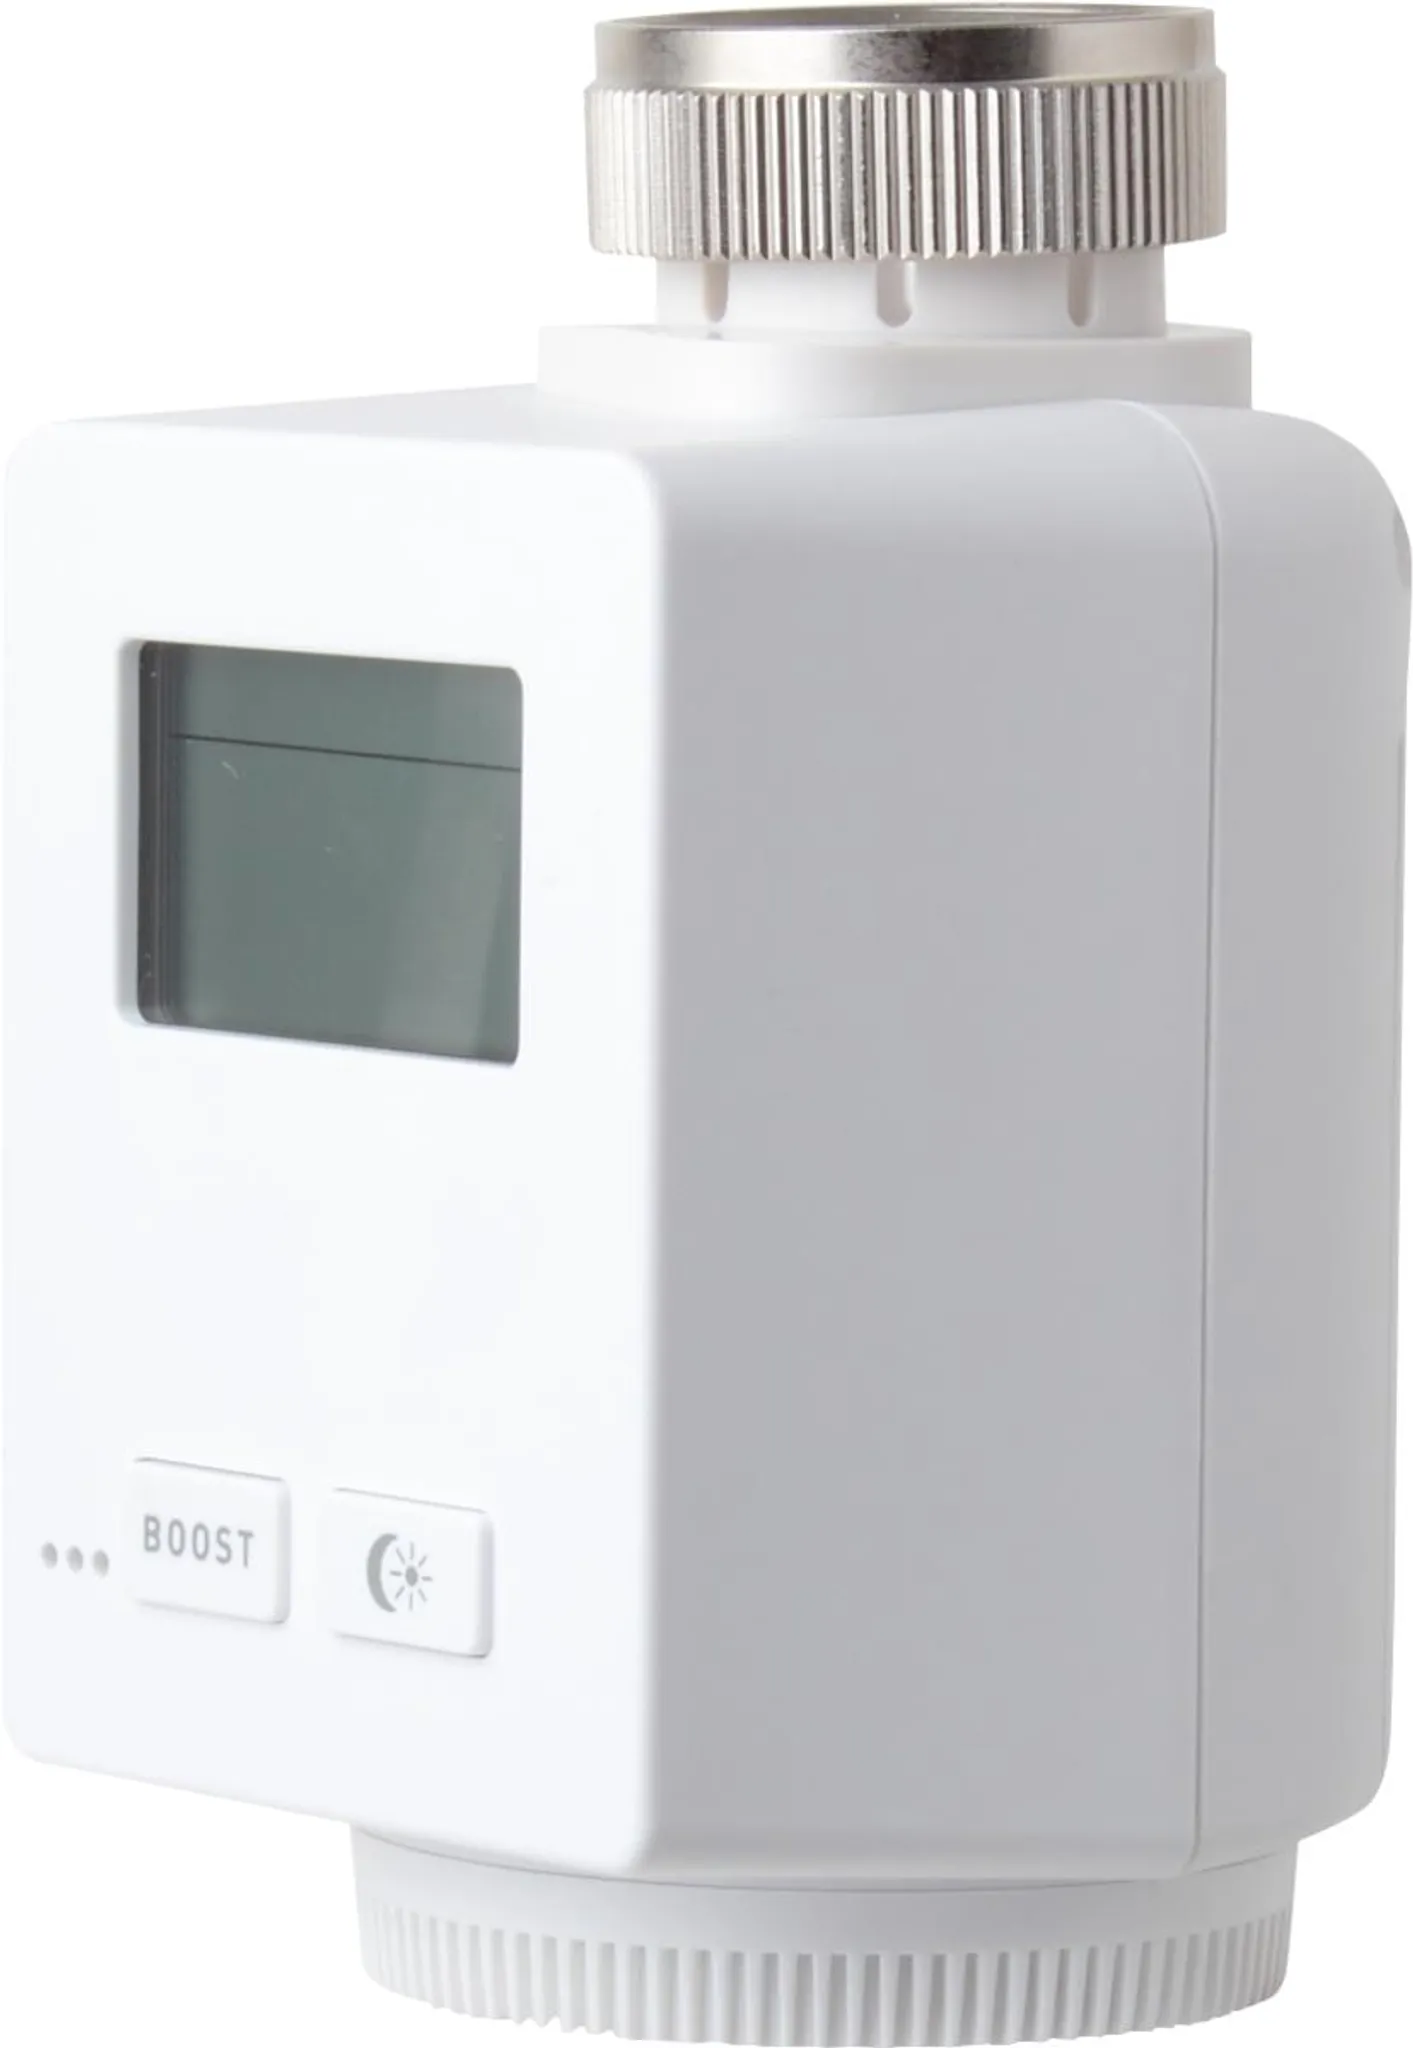 Konvektor-Radiator Agilia Smart IO Control Küchenartikel & Haushaltsartikel Haushaltsgeräte Klima und Heizgeräte Heizgeräte Konvektoren & Radiatoren 